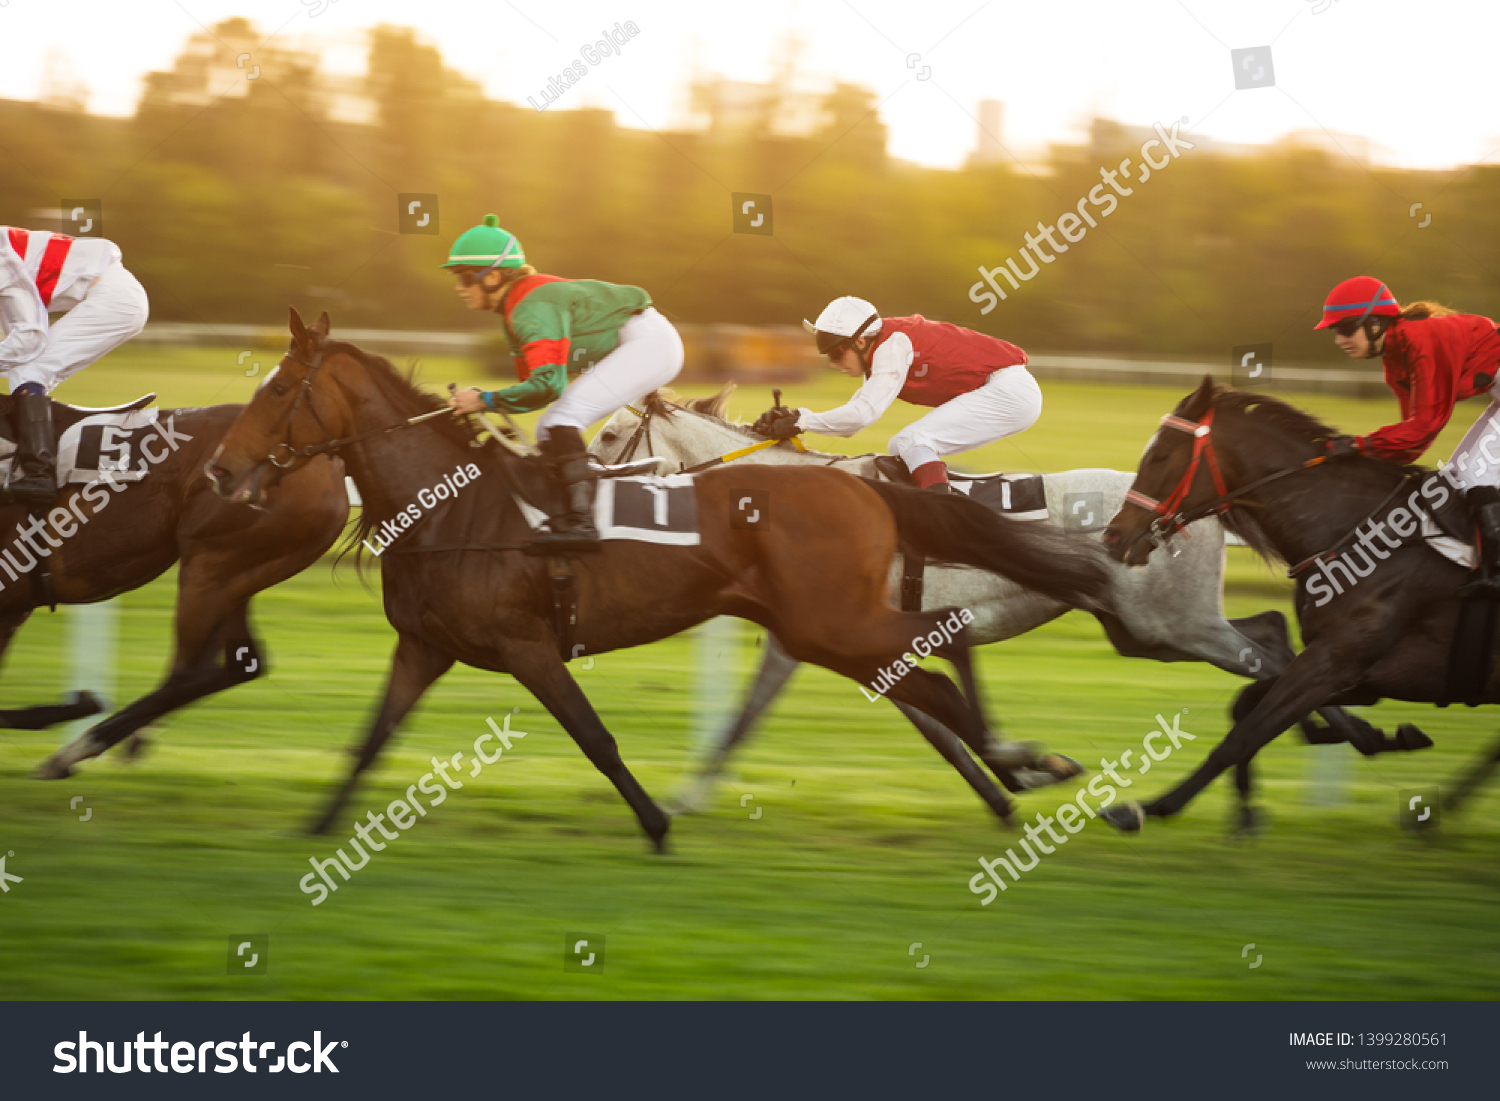 Race horses with jockeys on the home straight. Shaving effect. #1399280561